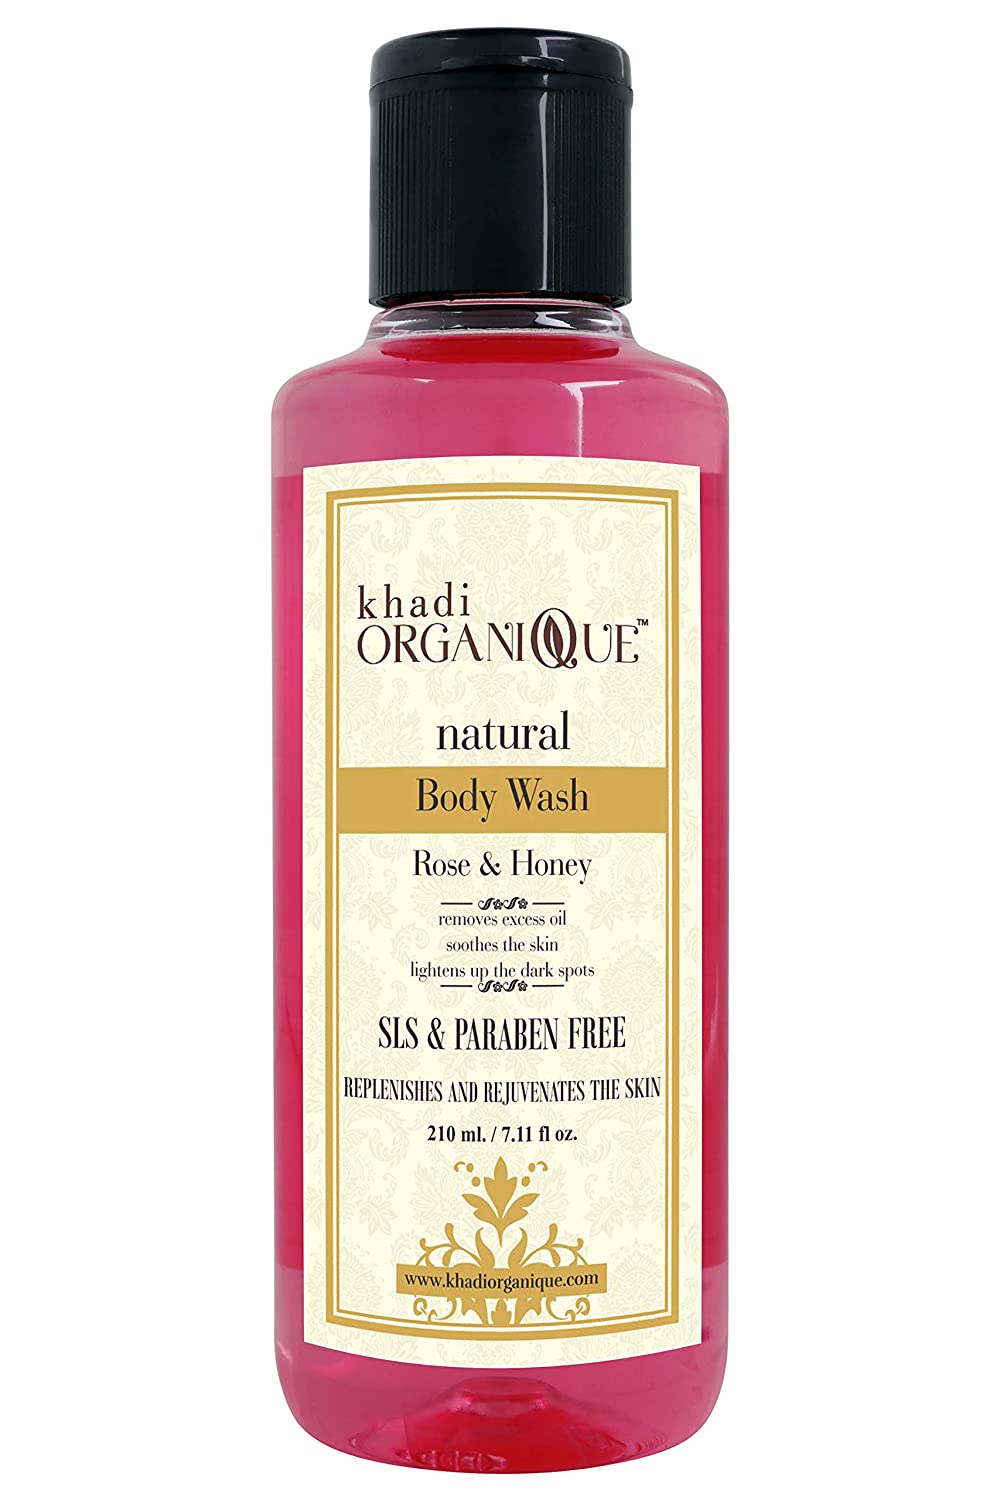 Khadi Organique Rose & Honey Body Wash Sls & Paraben Free